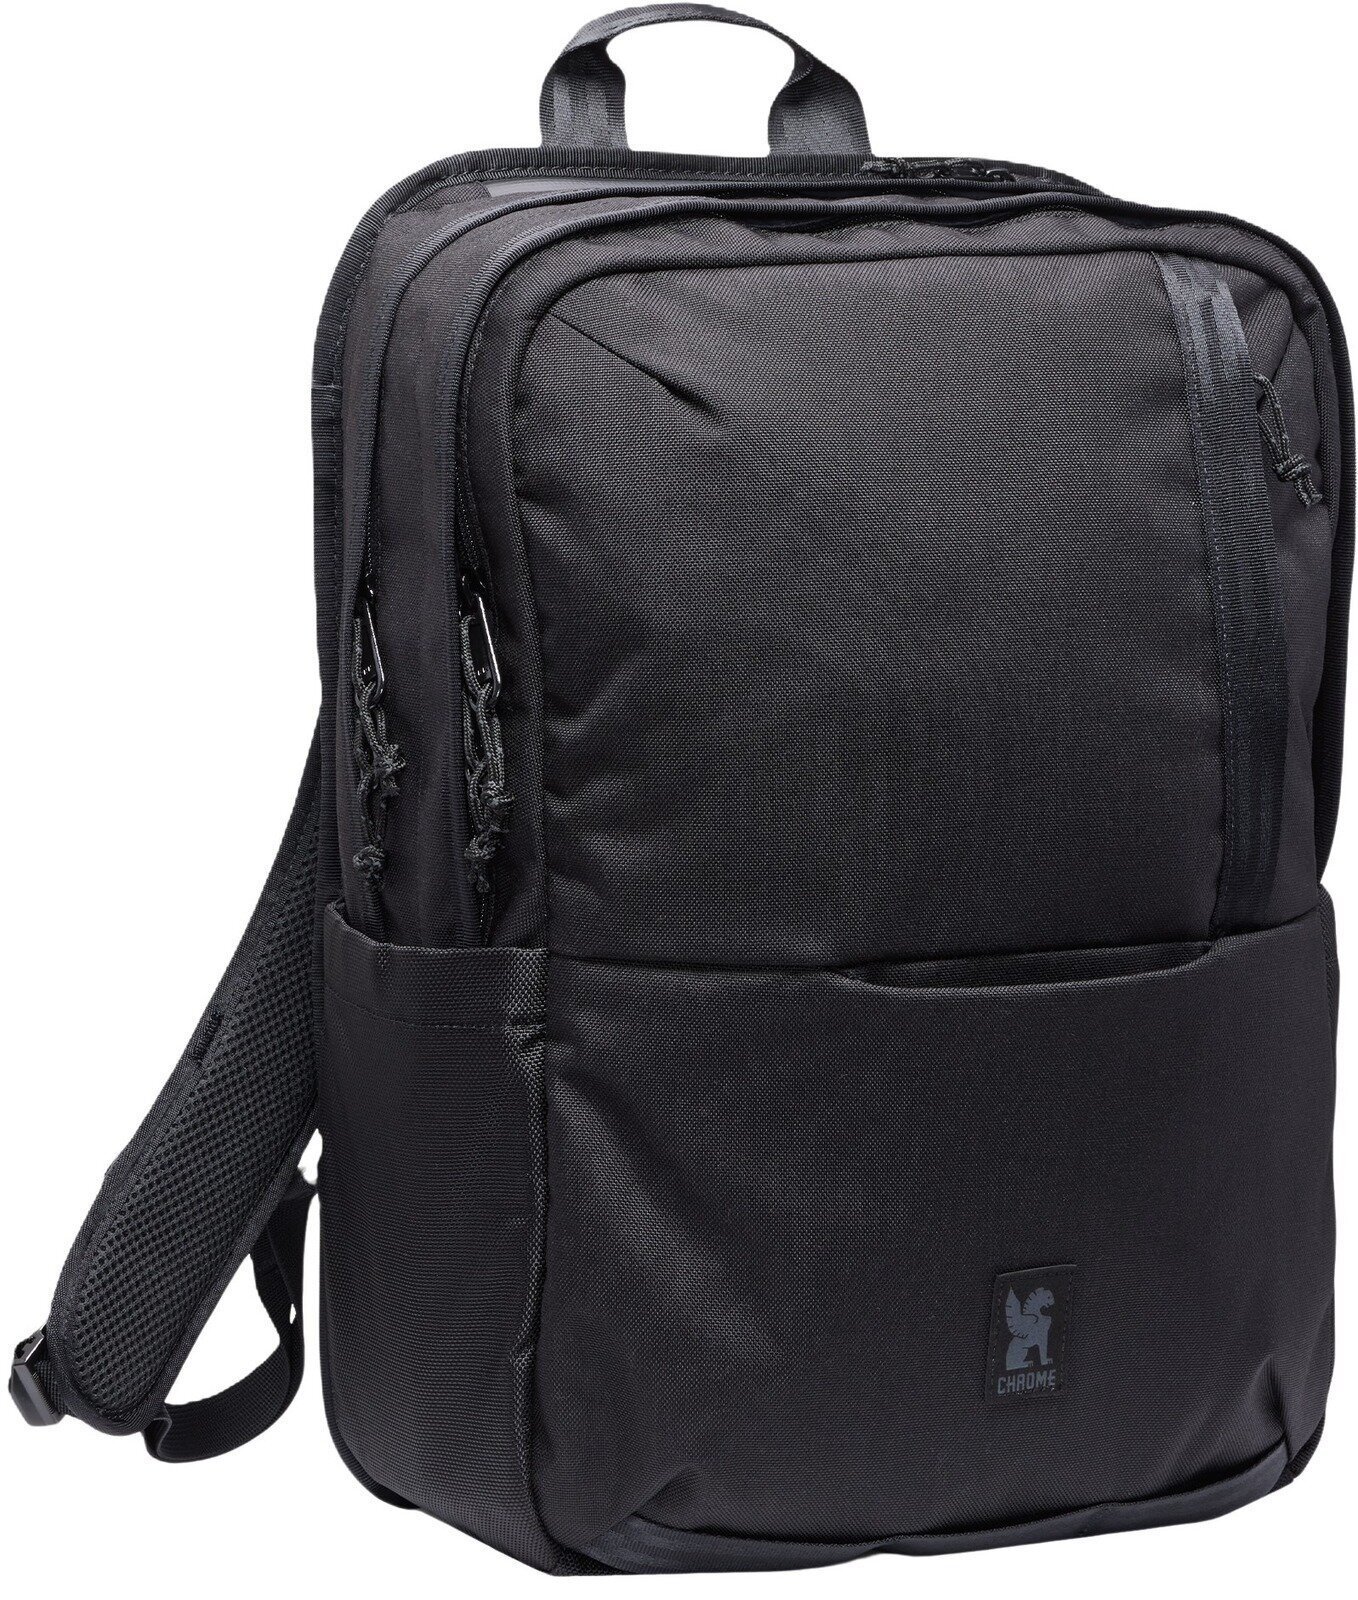 Lifestyle Backpack / Bag Chrome Hawes Backpack Black 26 L Backpack